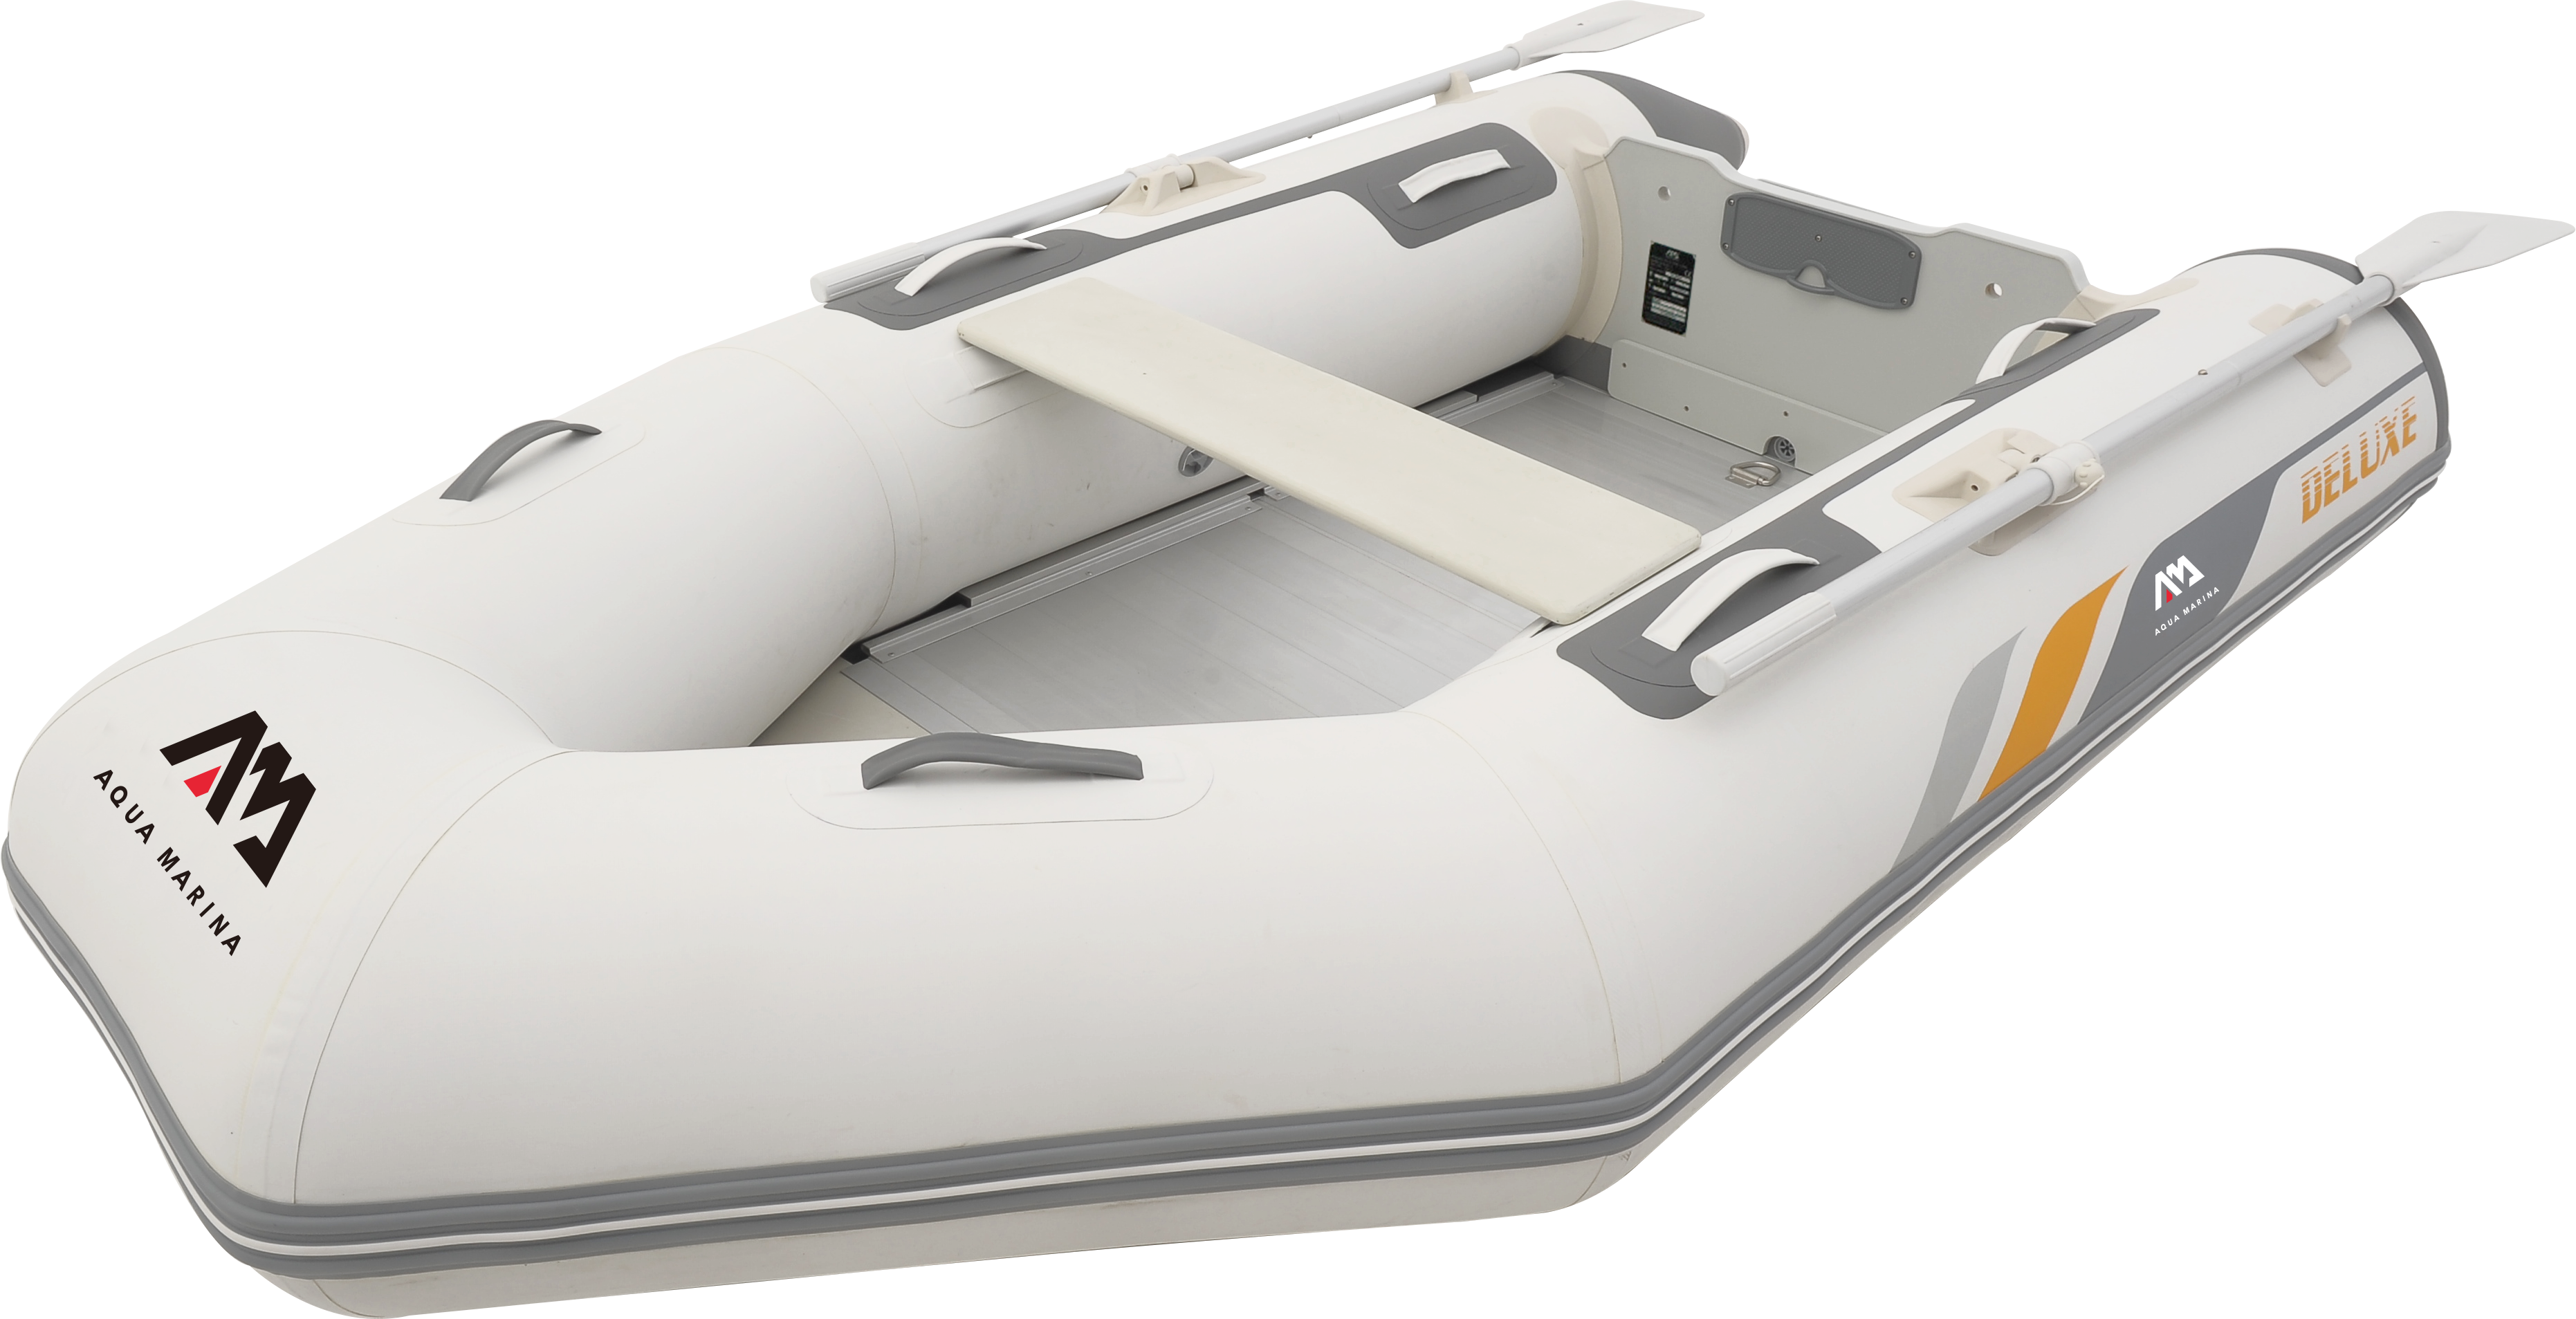 Wood Slat Floor Aqua Marina Deluxe Heavy Duty Tender/Sports Boat 2.5m